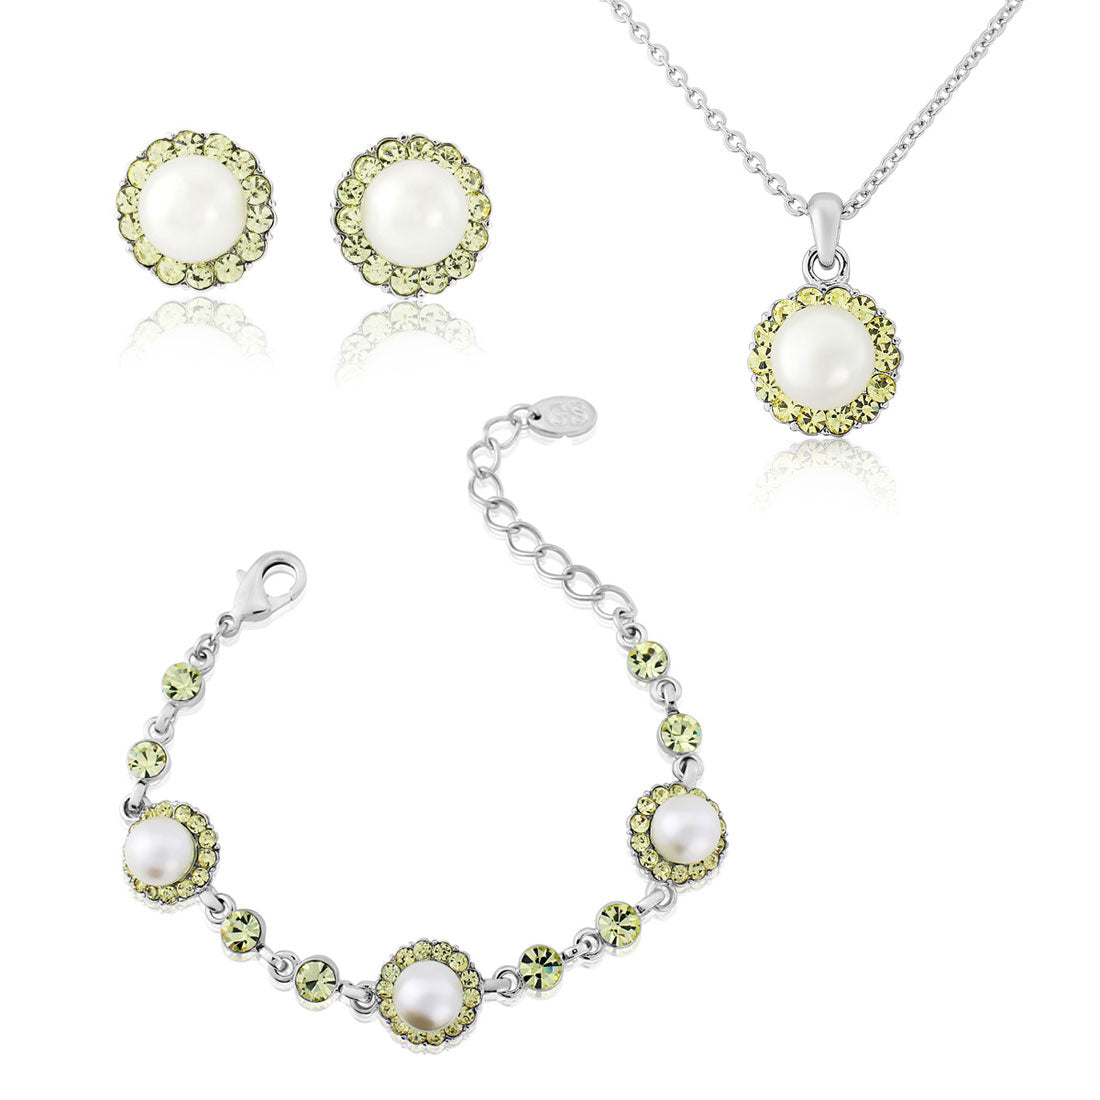 Lemon Dream Pearl Jewellery Set with Pendant, Bracelet and Earrings